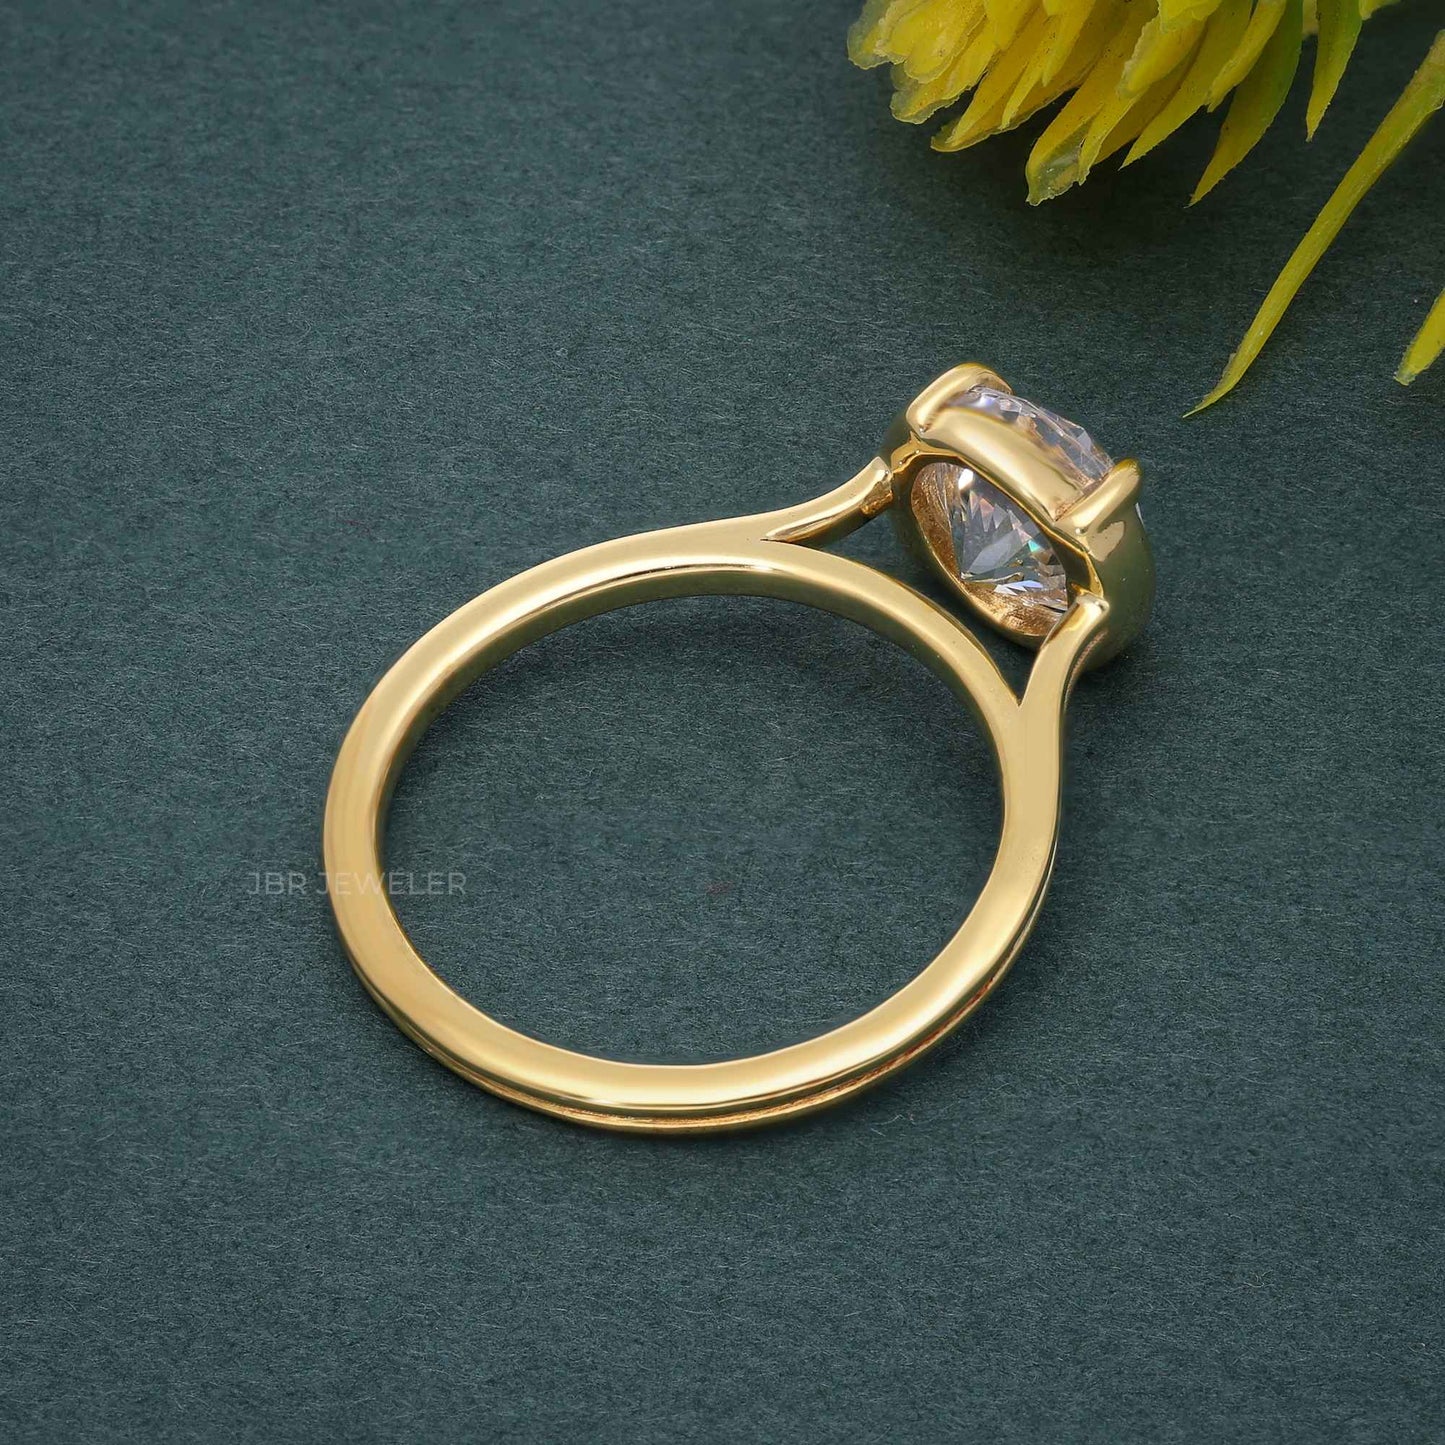 Silhouette Round Lab Grown Diamond Solitaire Ring